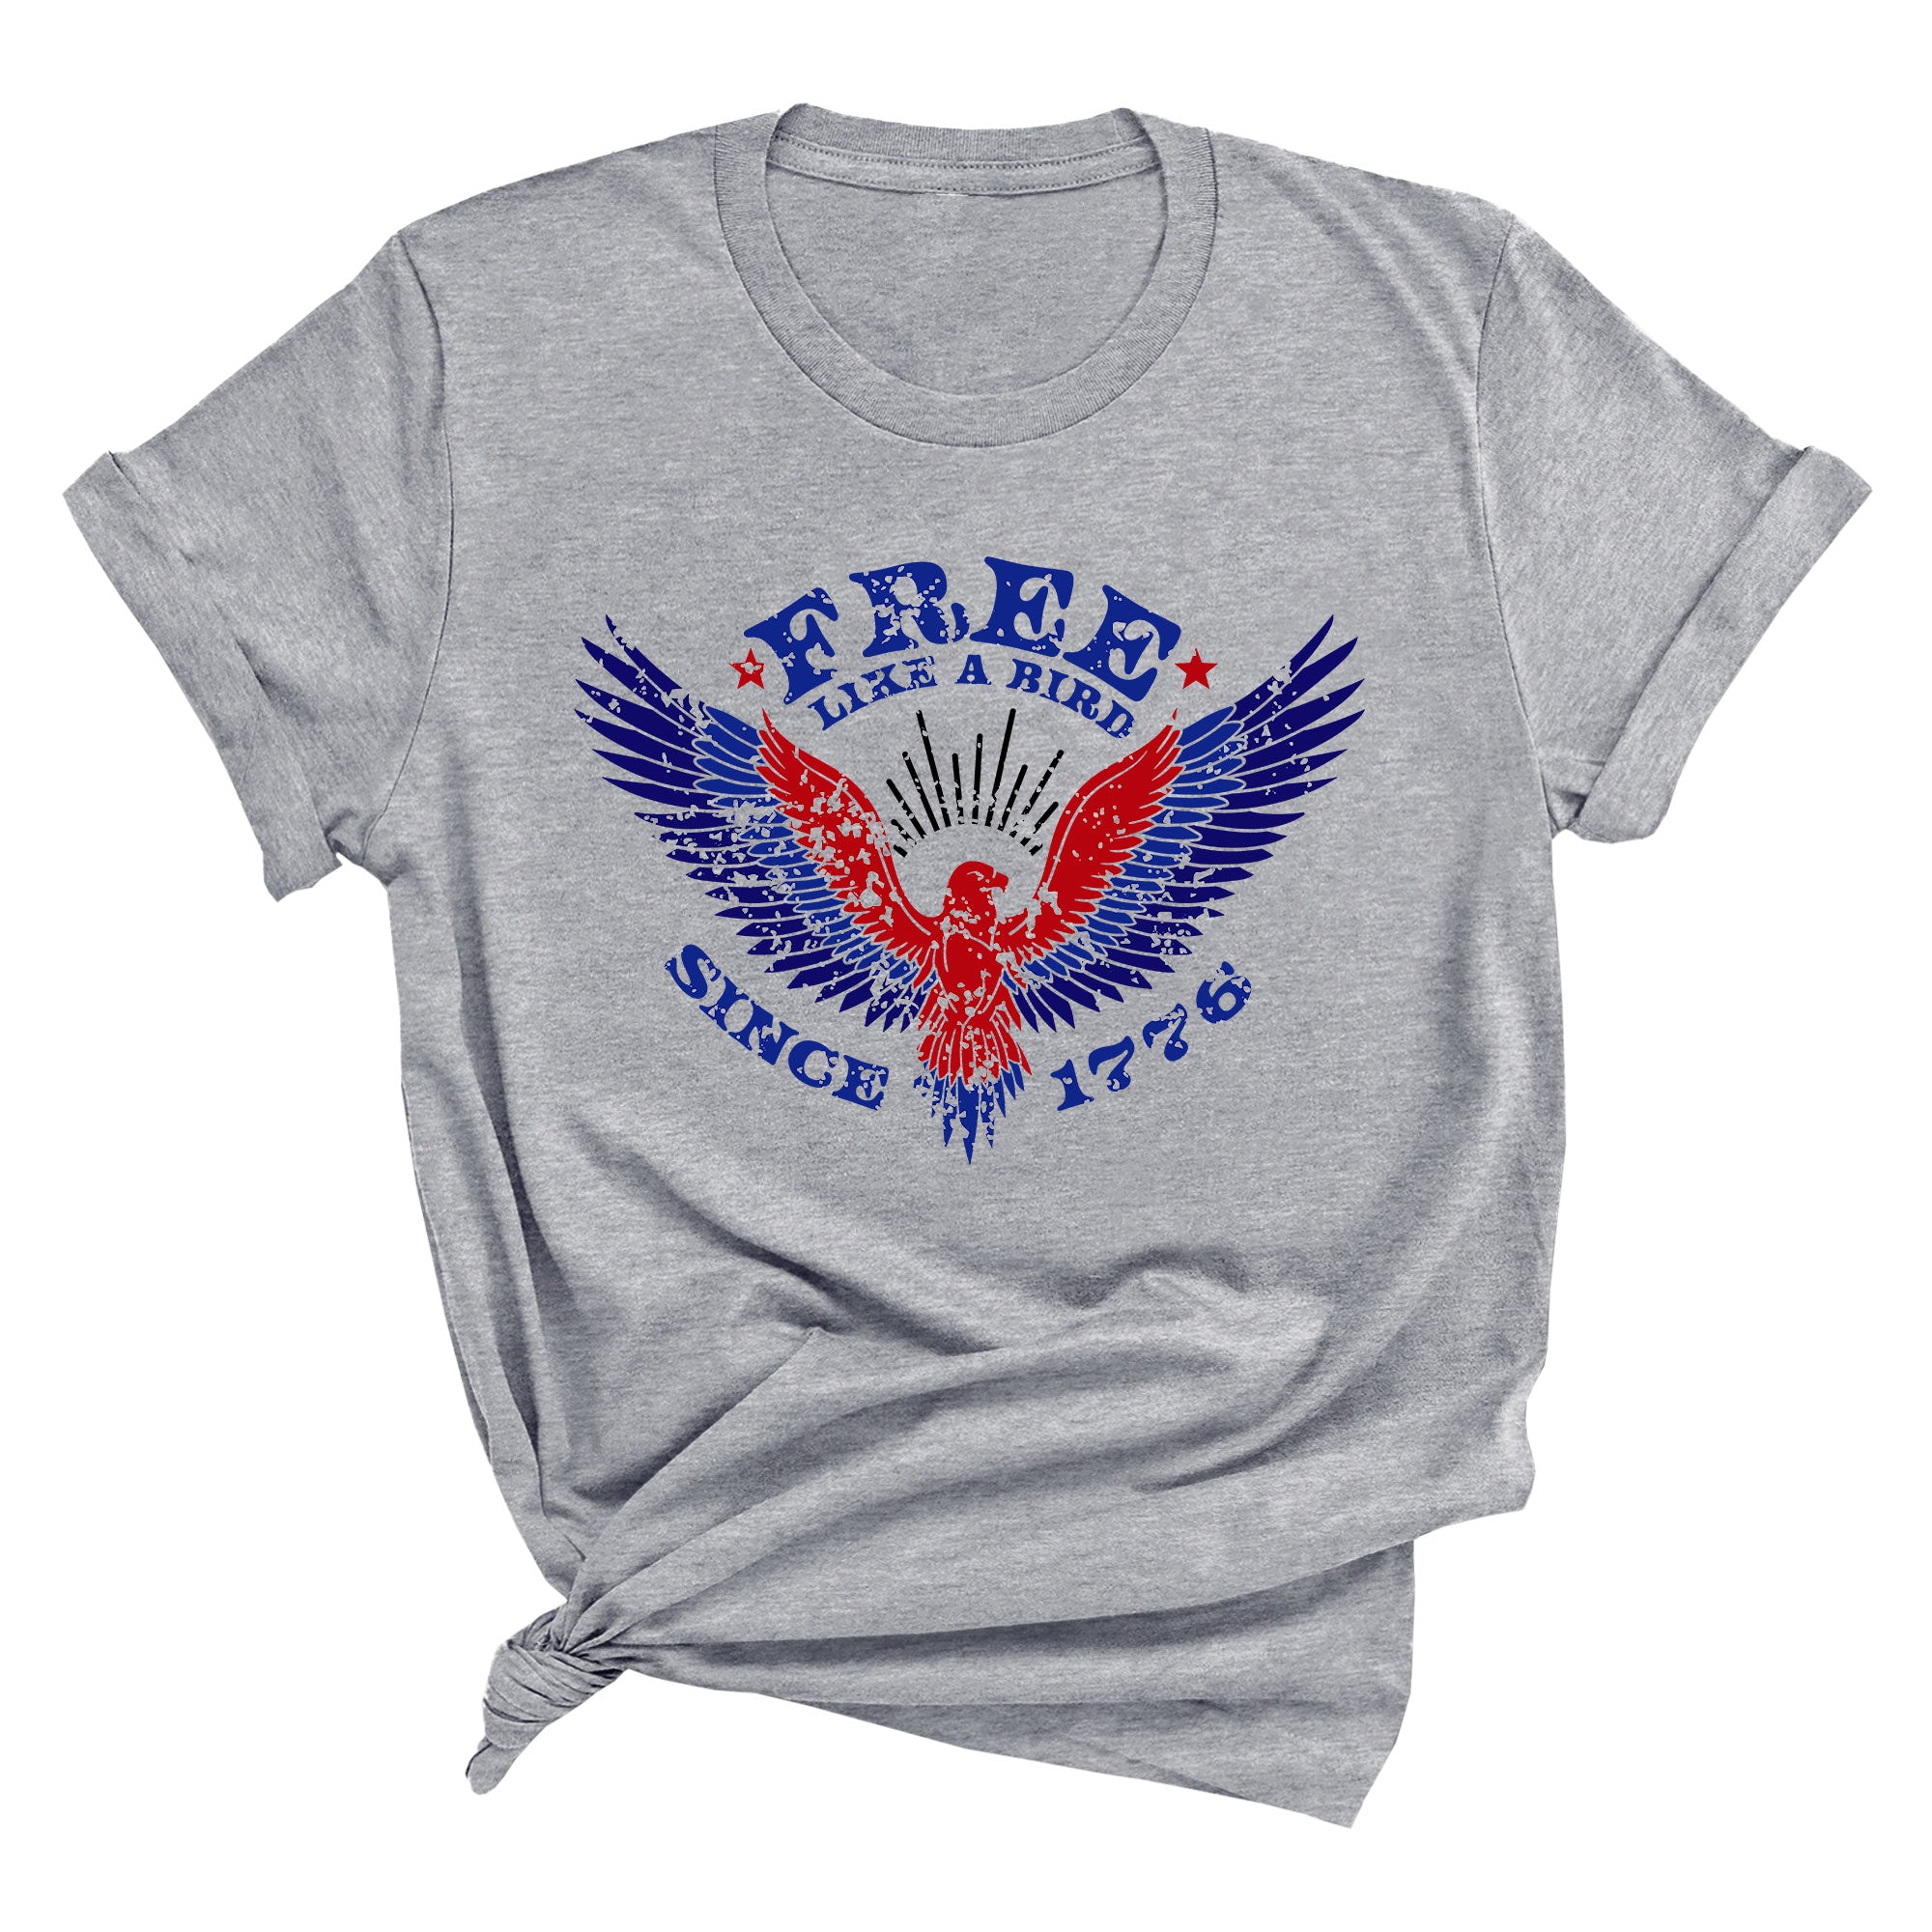 Free Like a Bird Since 1776 Premium Unisex T-Shirt